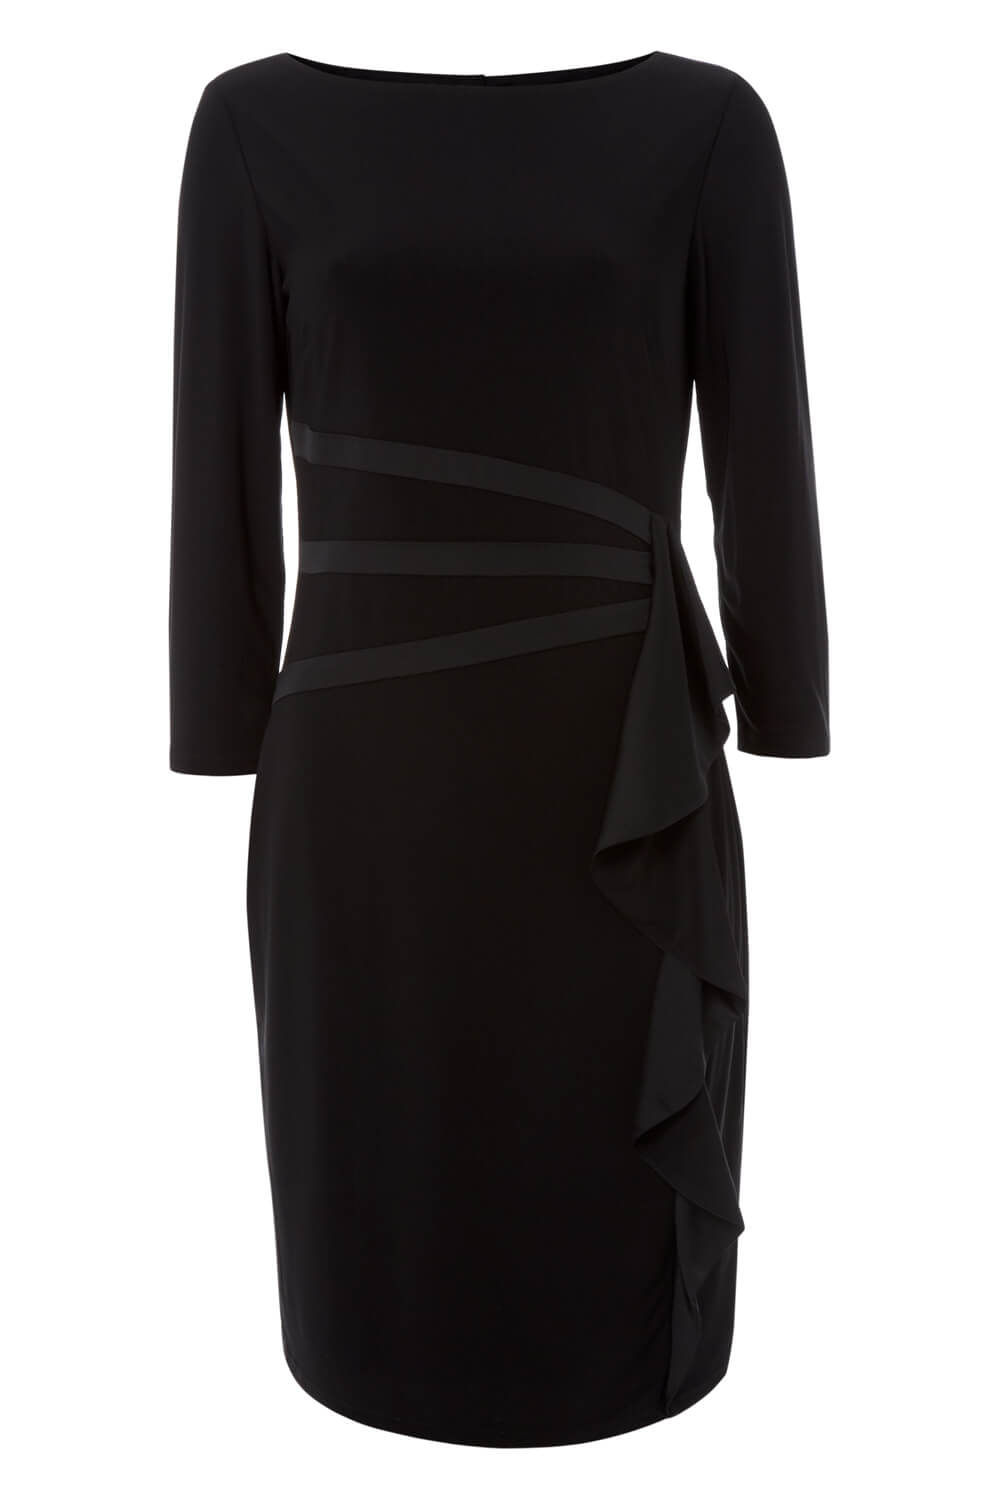 Black Ruffle Detail Dress, Image 4 of 4